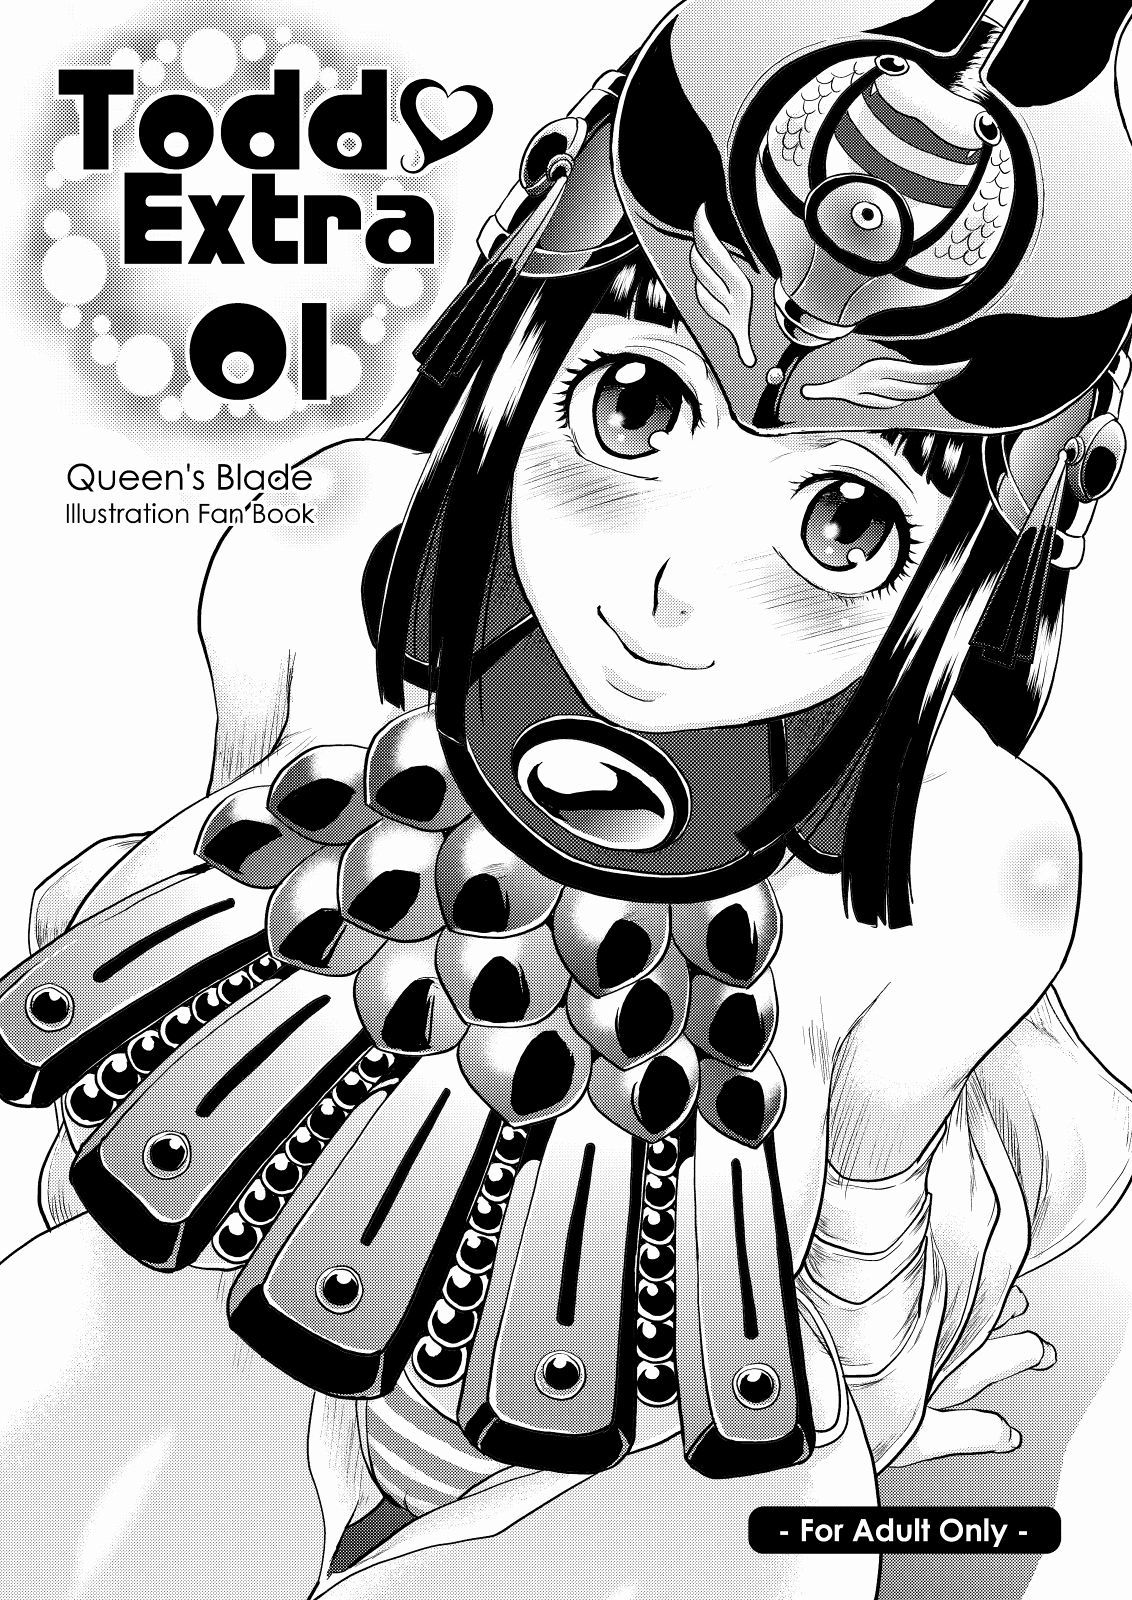 Todd Extra 01 queens blade hentai manga